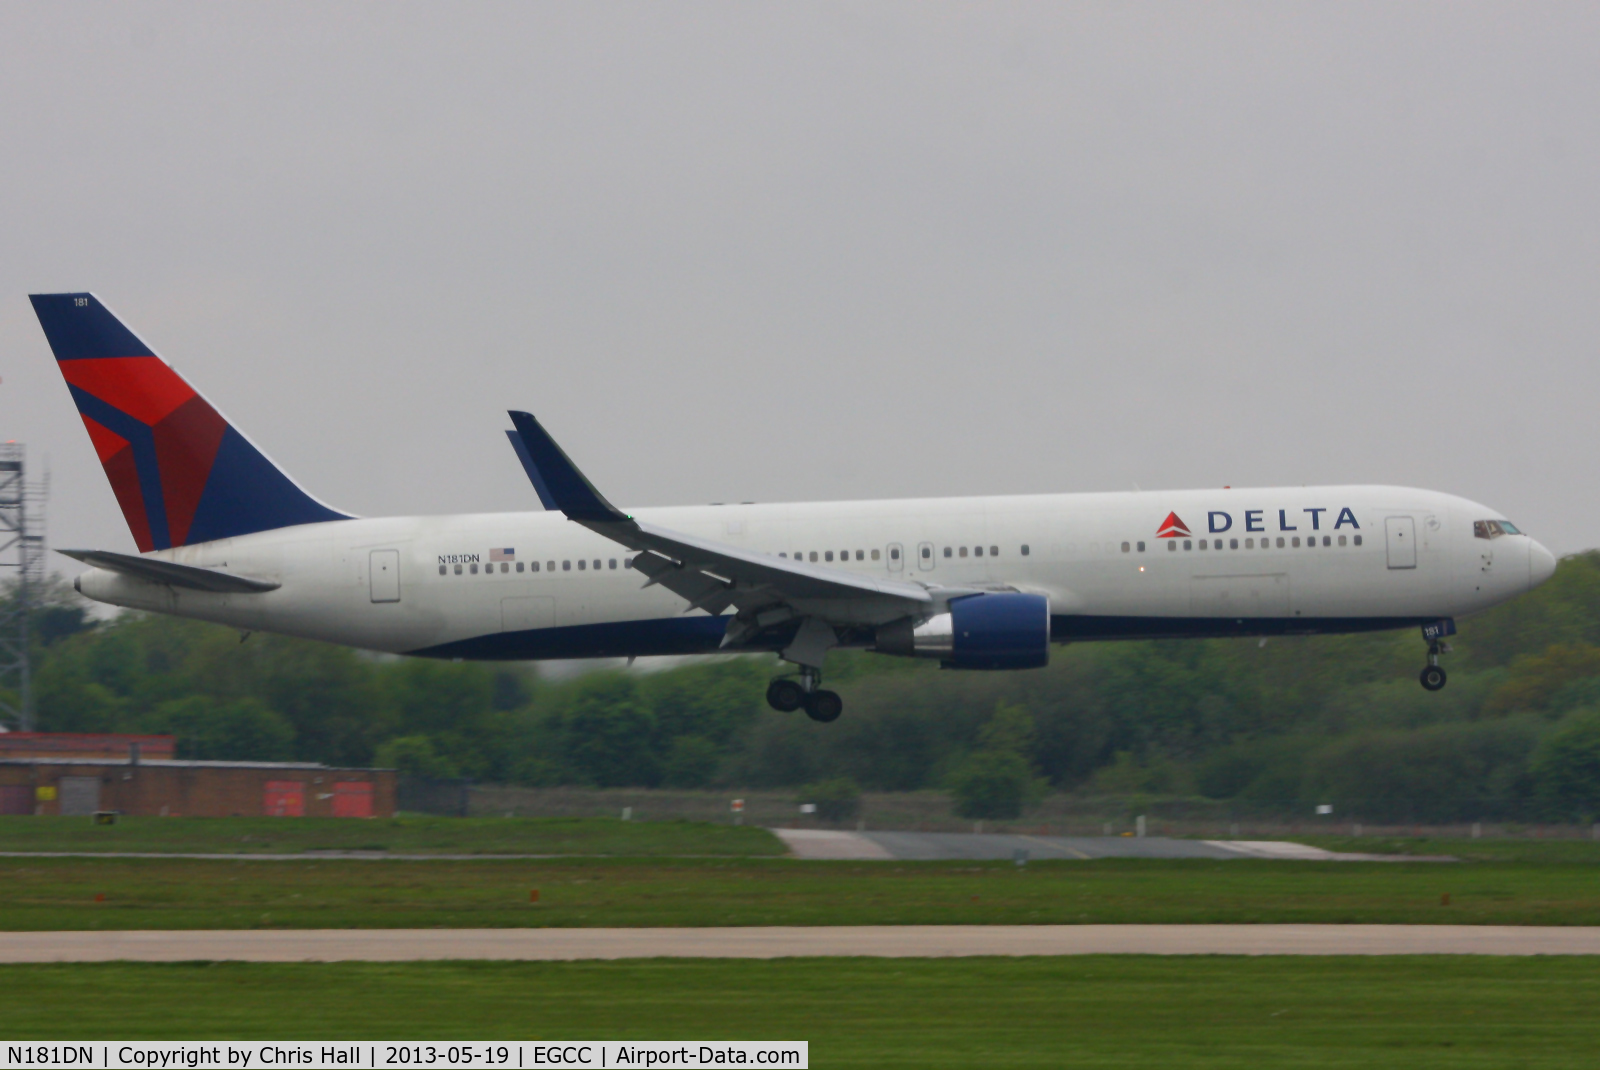 N181DN, 1992 Boeing 767-332 C/N 25986, Delta